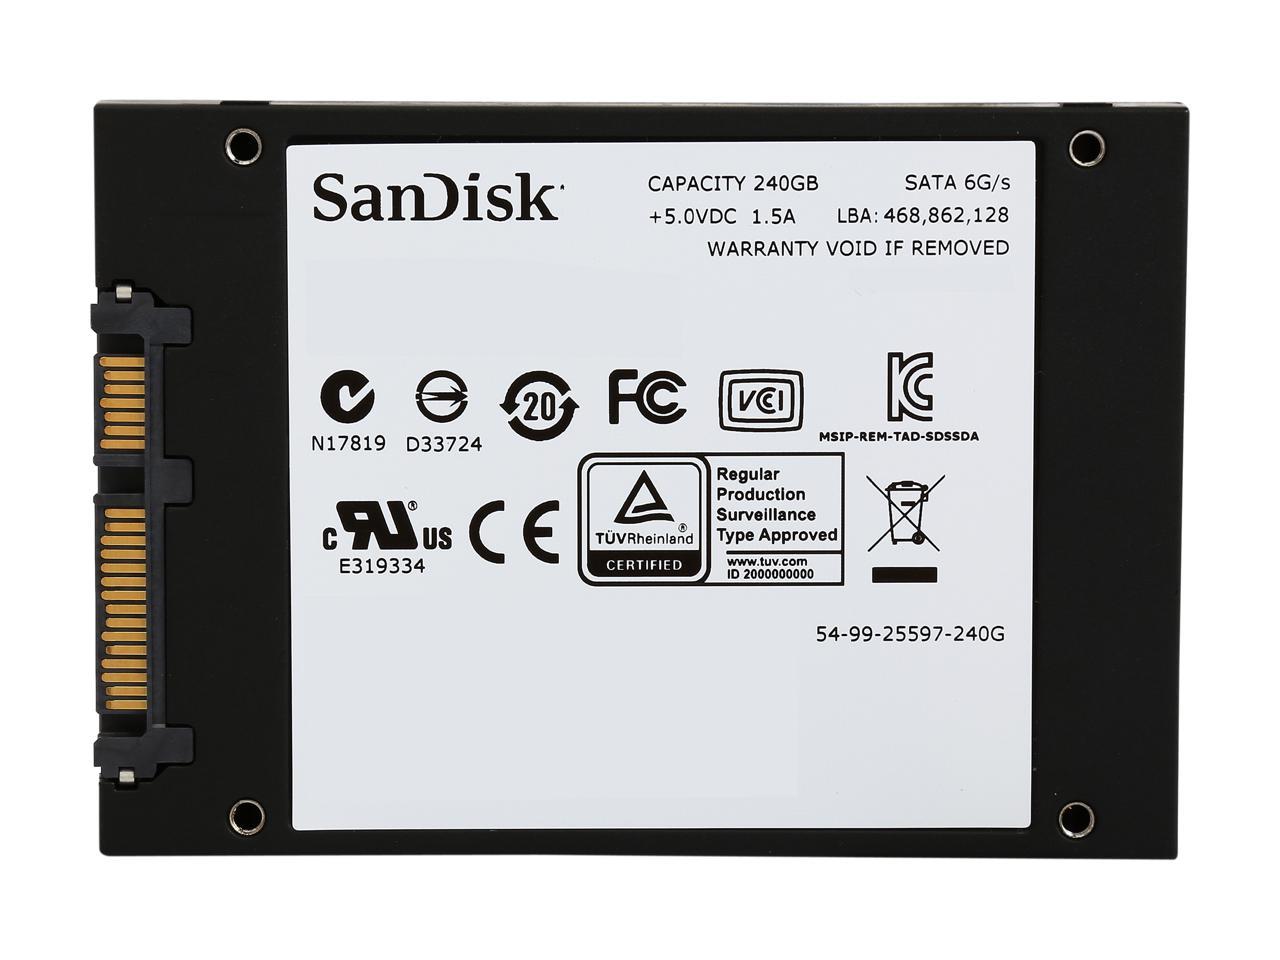 SanDisk SSD PLUS 240GB SATA III 6G/s 2.5" 7mm Solid State Drive SDSSDA-240G 